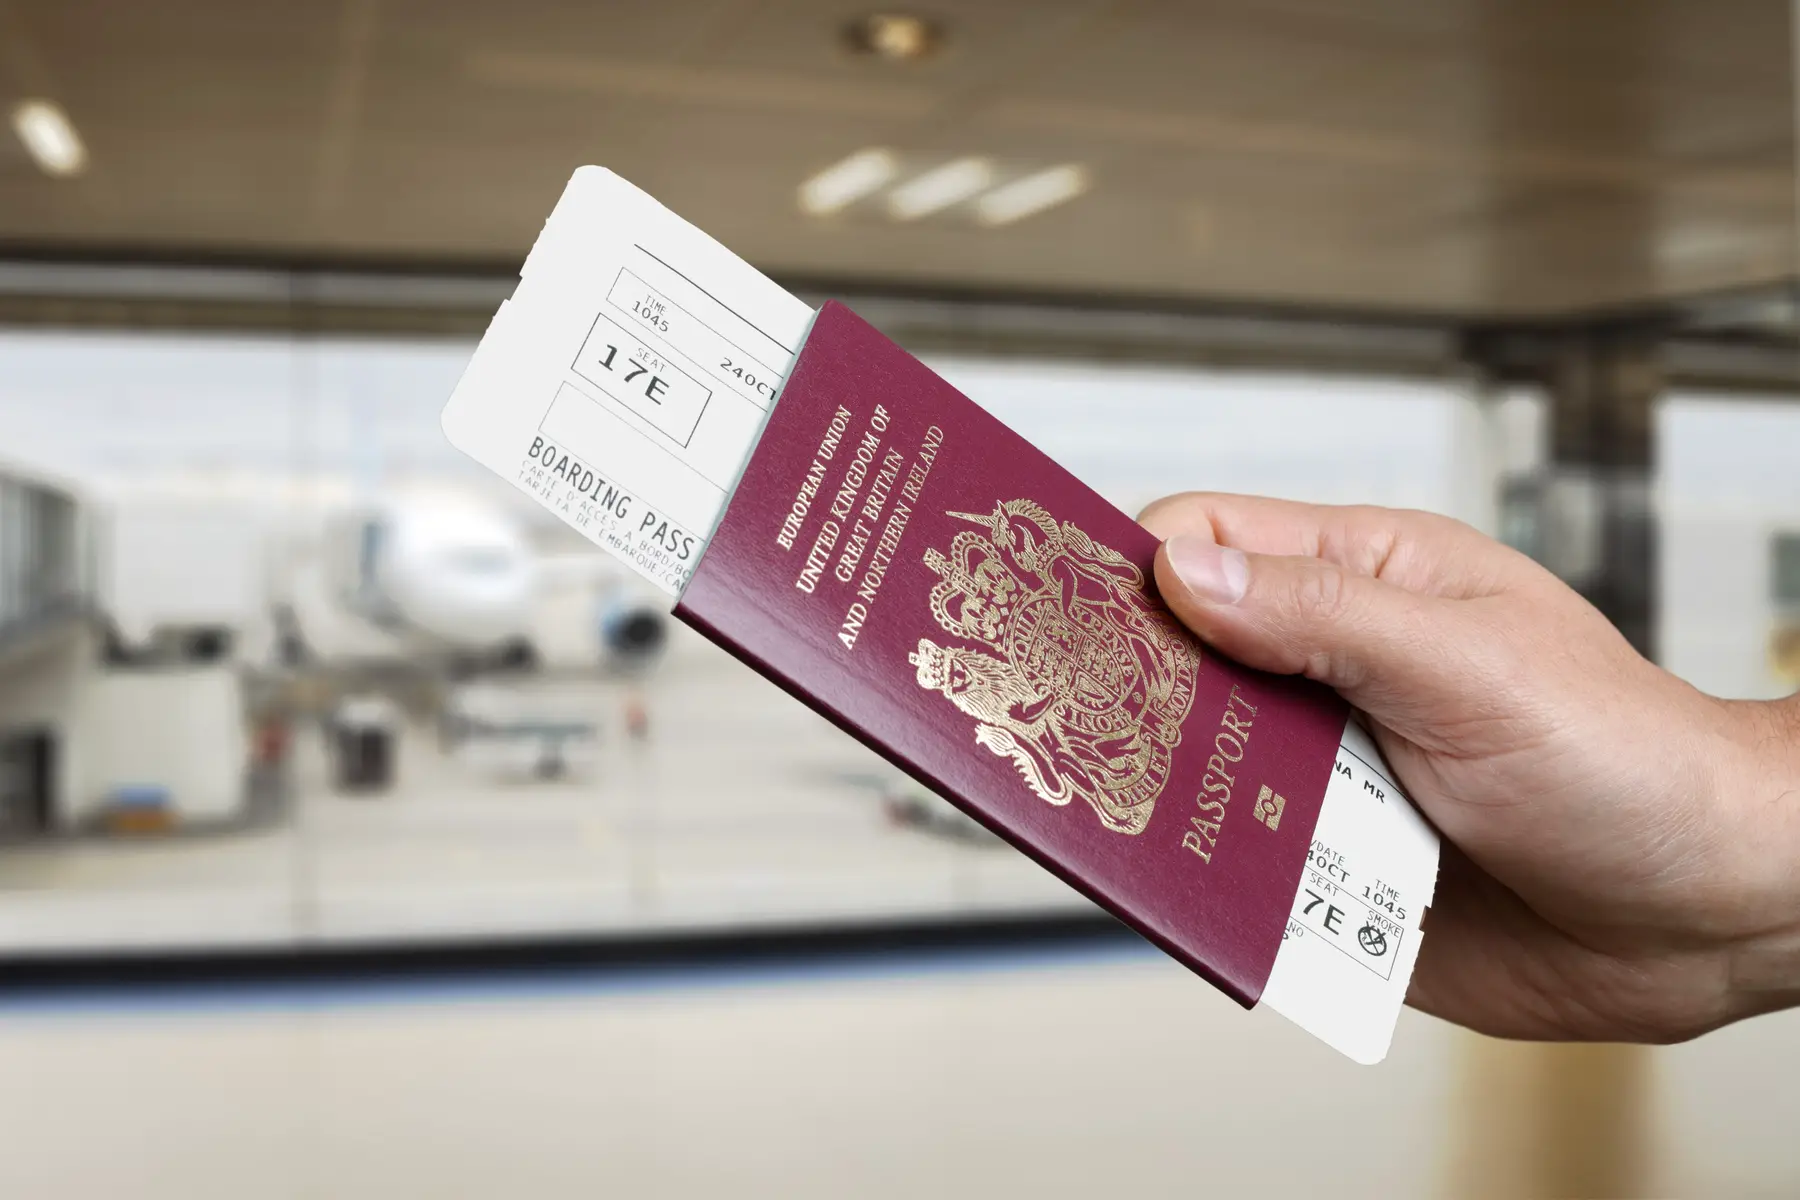 Man traveling with a British passport